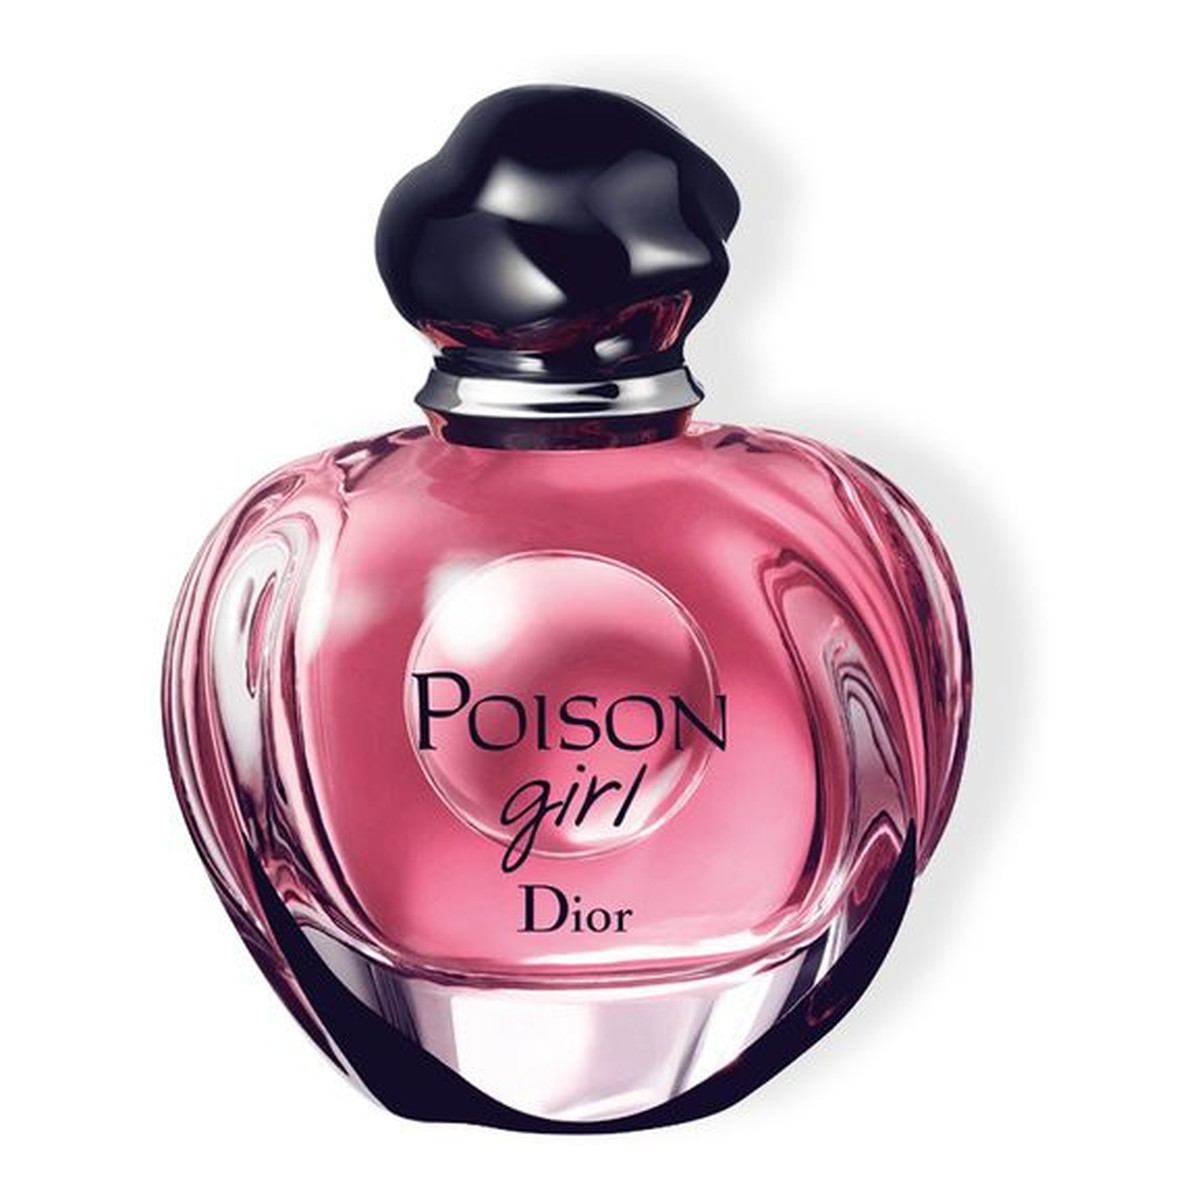 Dior Poison Girl woda toaletowa tester 100ml